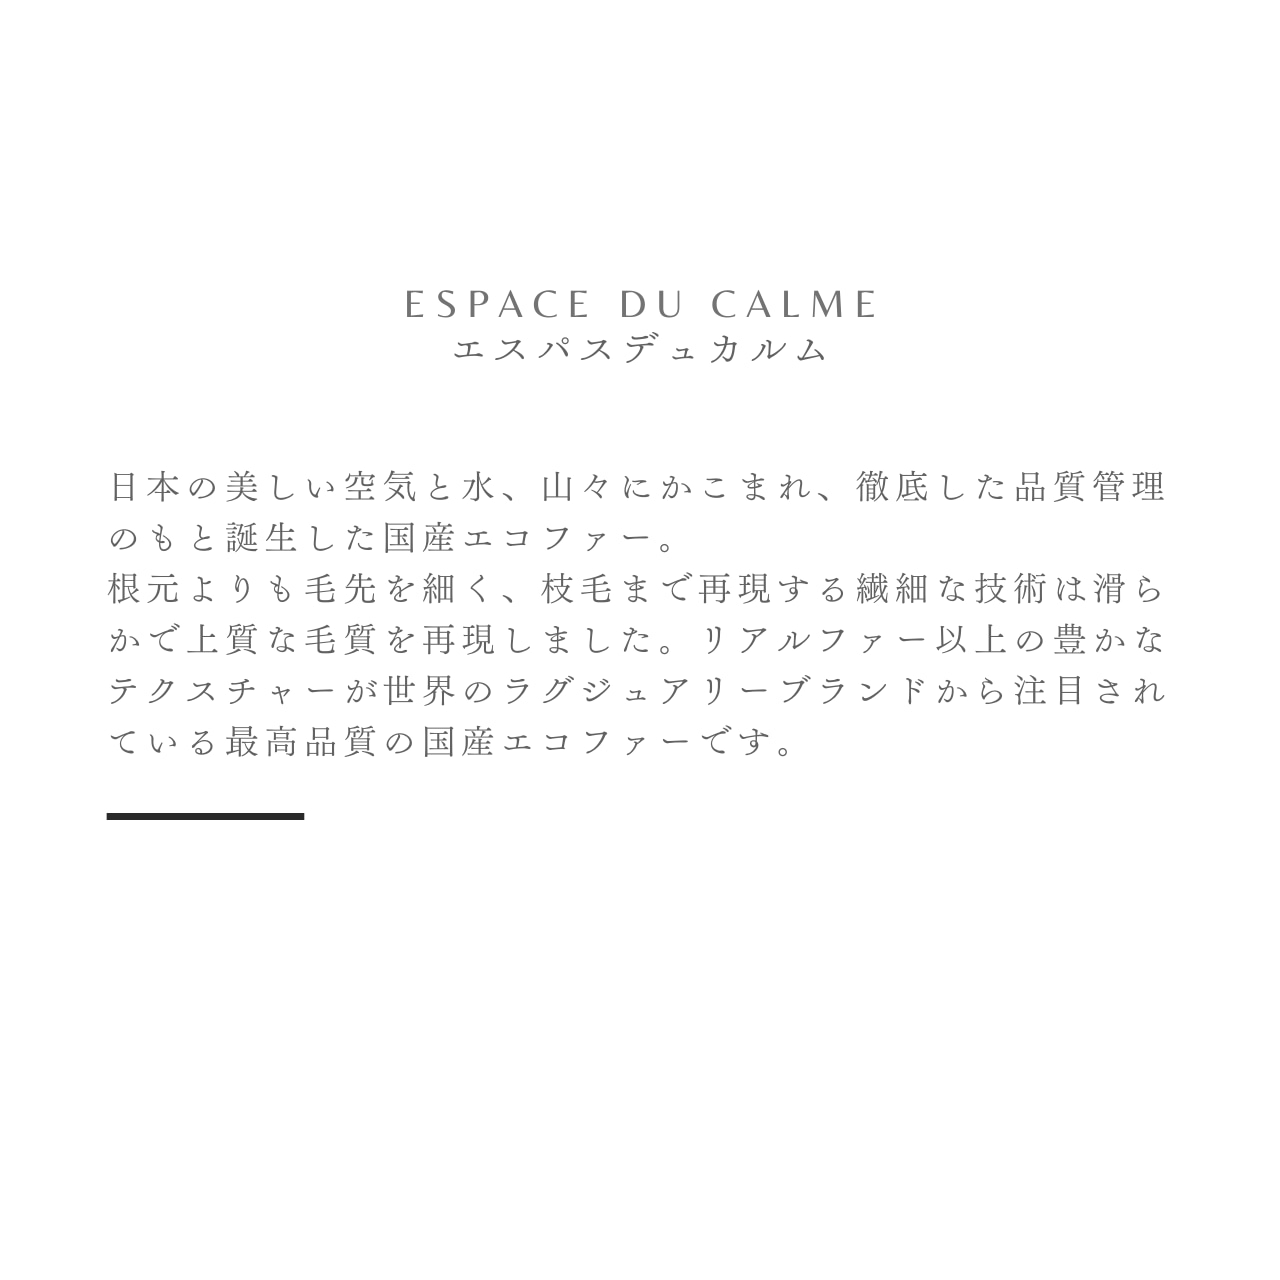 【TVで紹介】 Espace du calme ファークッションカバー40x40㎝ ラフミックス  エコファー 日本製